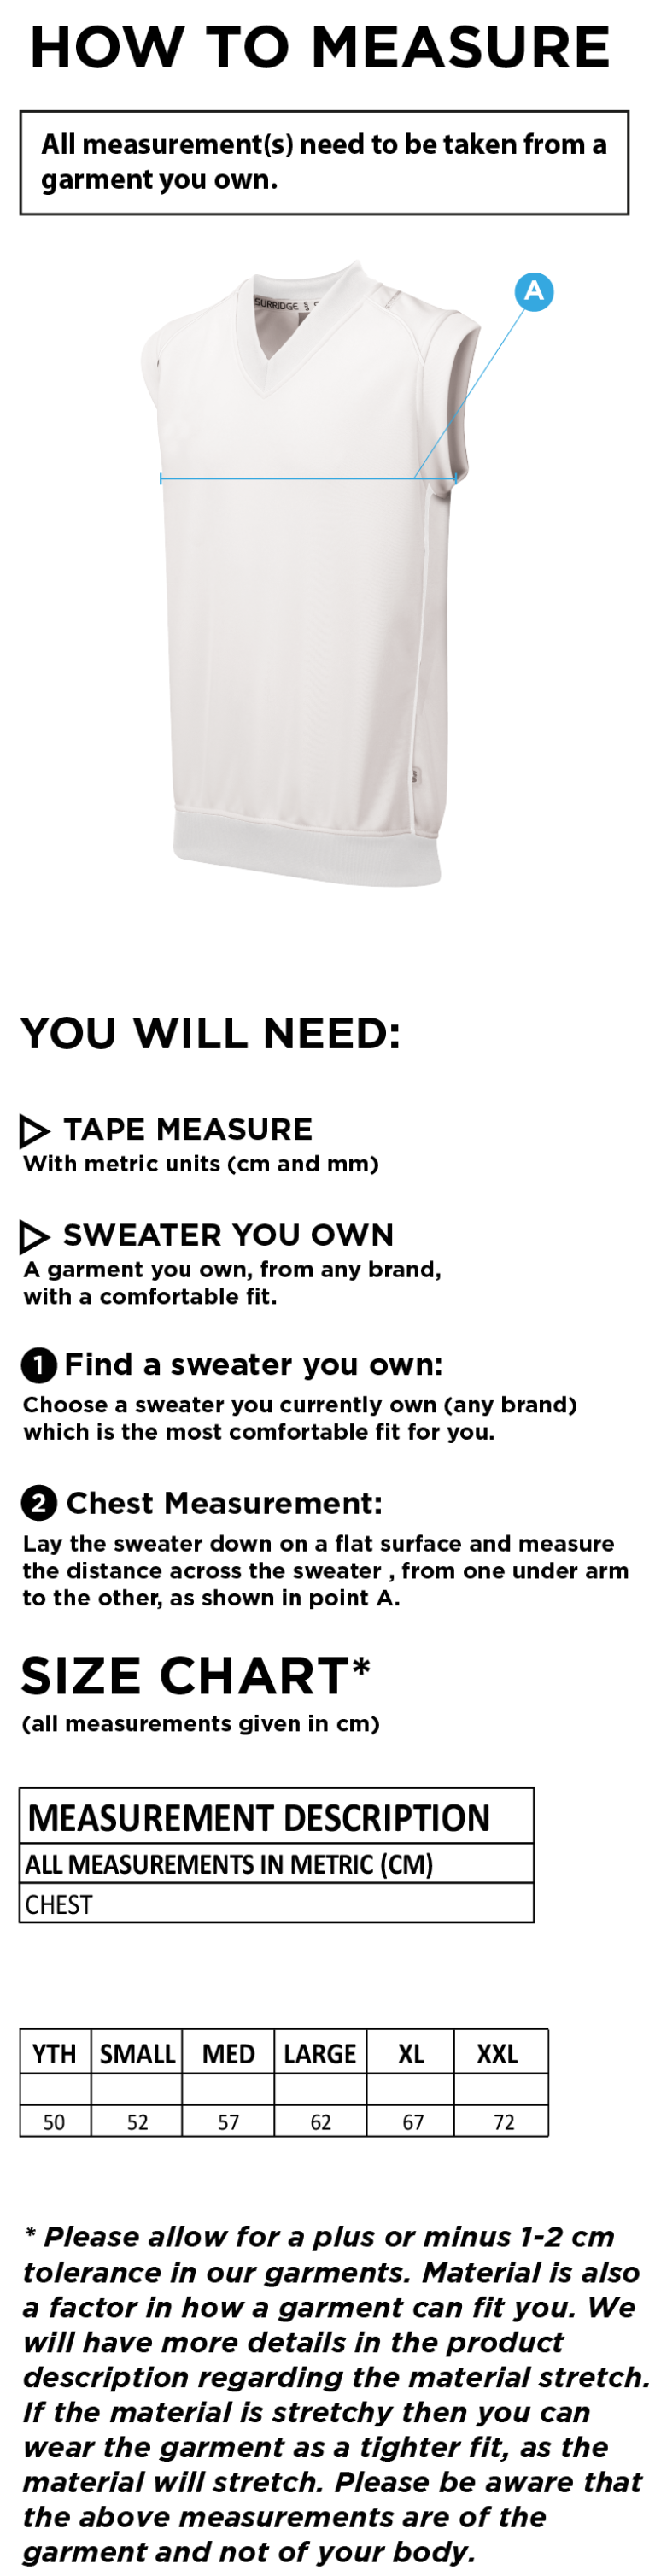 Old Rutlishians CC - Curve Sleeveless Sweater - Size Guide